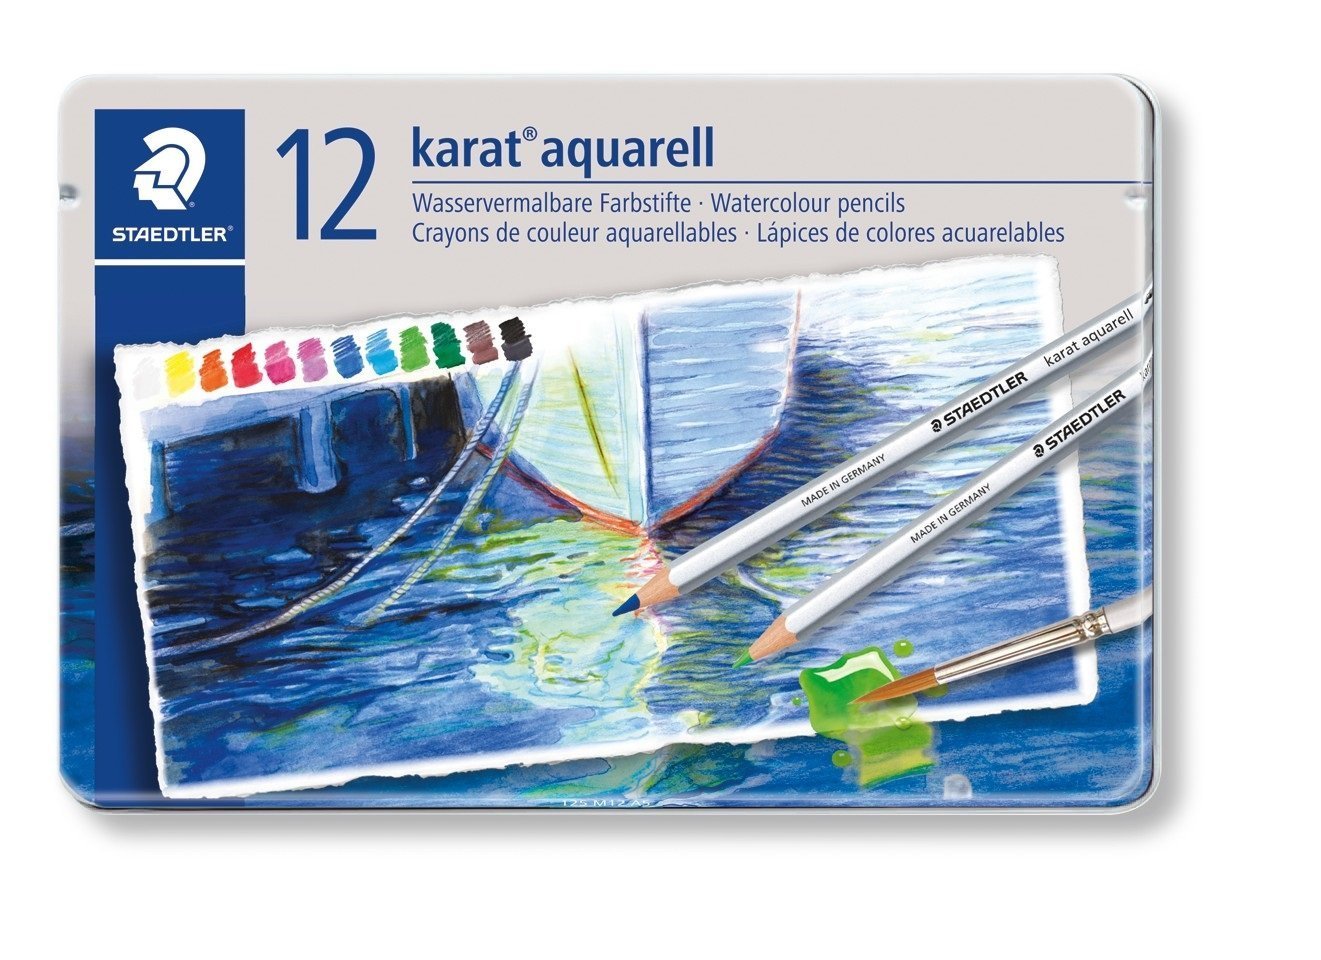 Staedtler - Karat aquarell watercolour pencil, 12 pcs - Leker